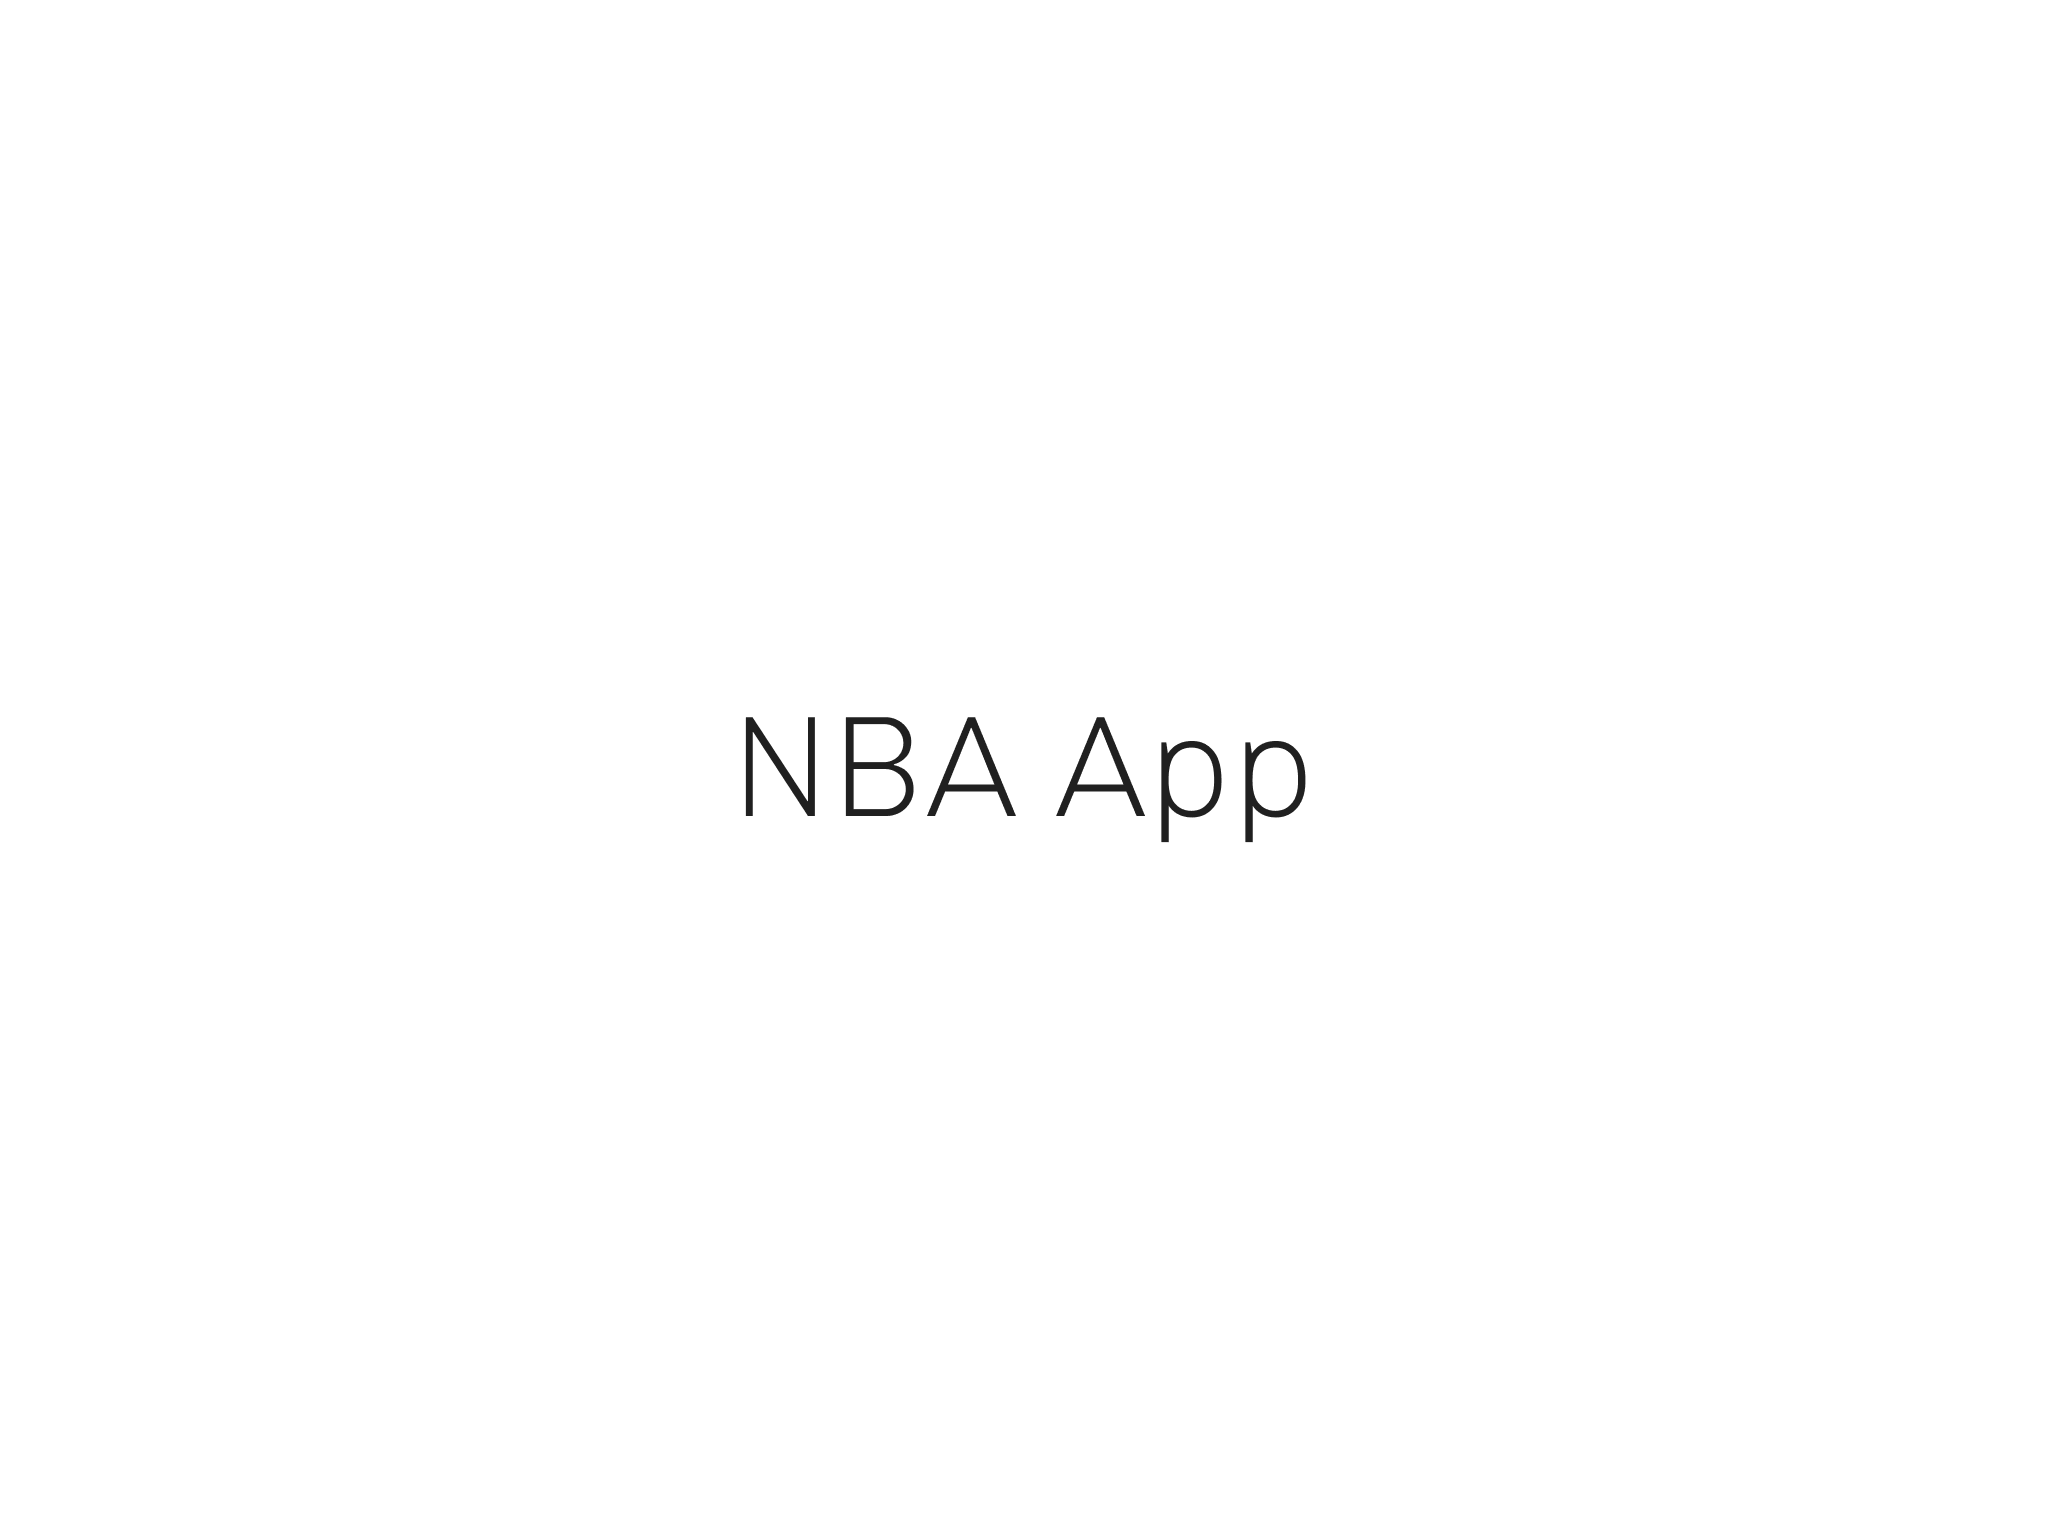 NBA Apps – Interview